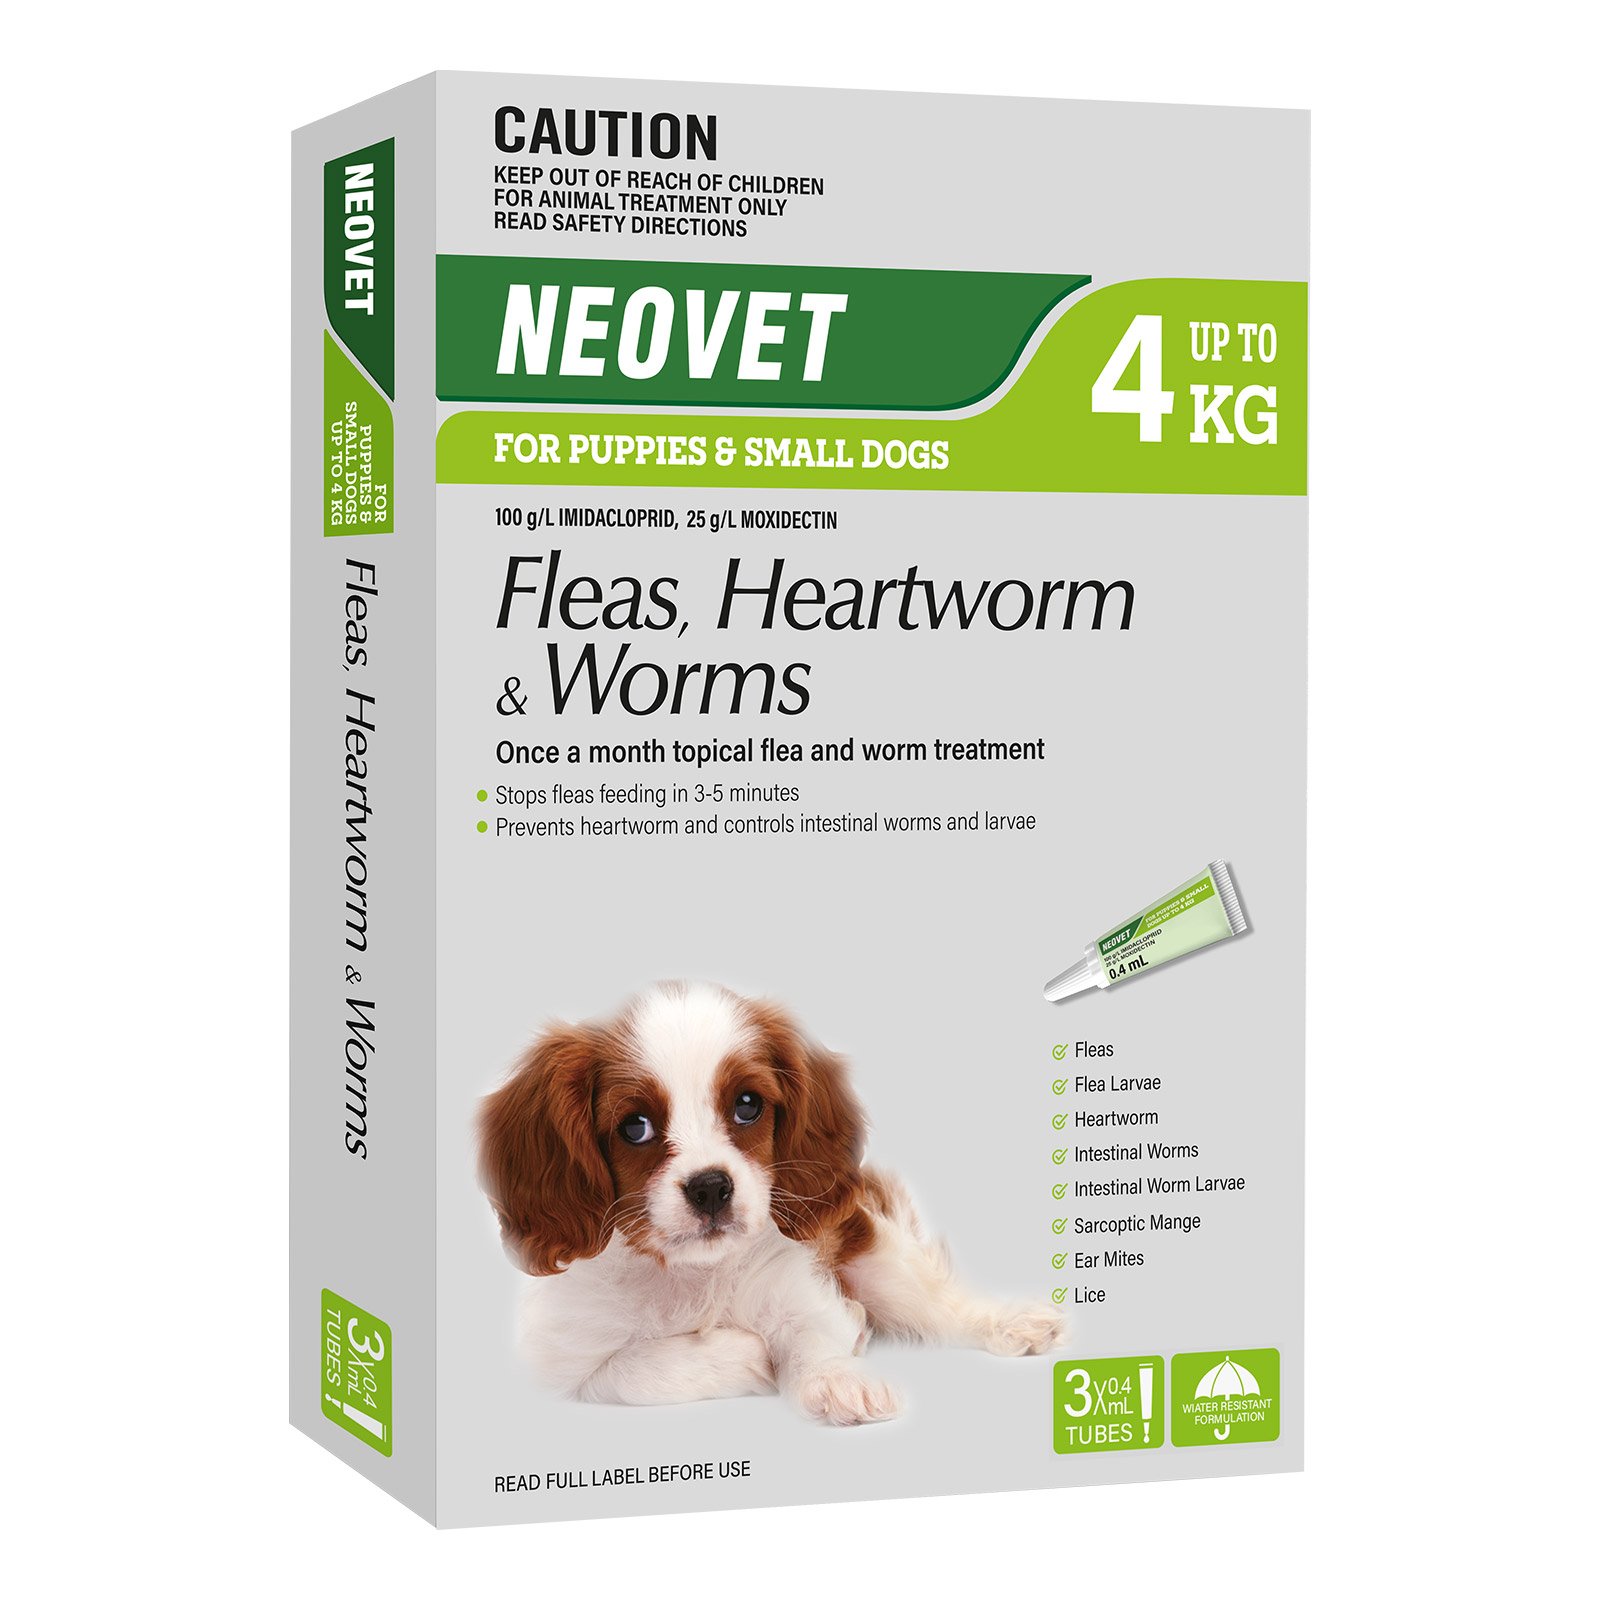 Neovet Spot-On for Dog Supplies